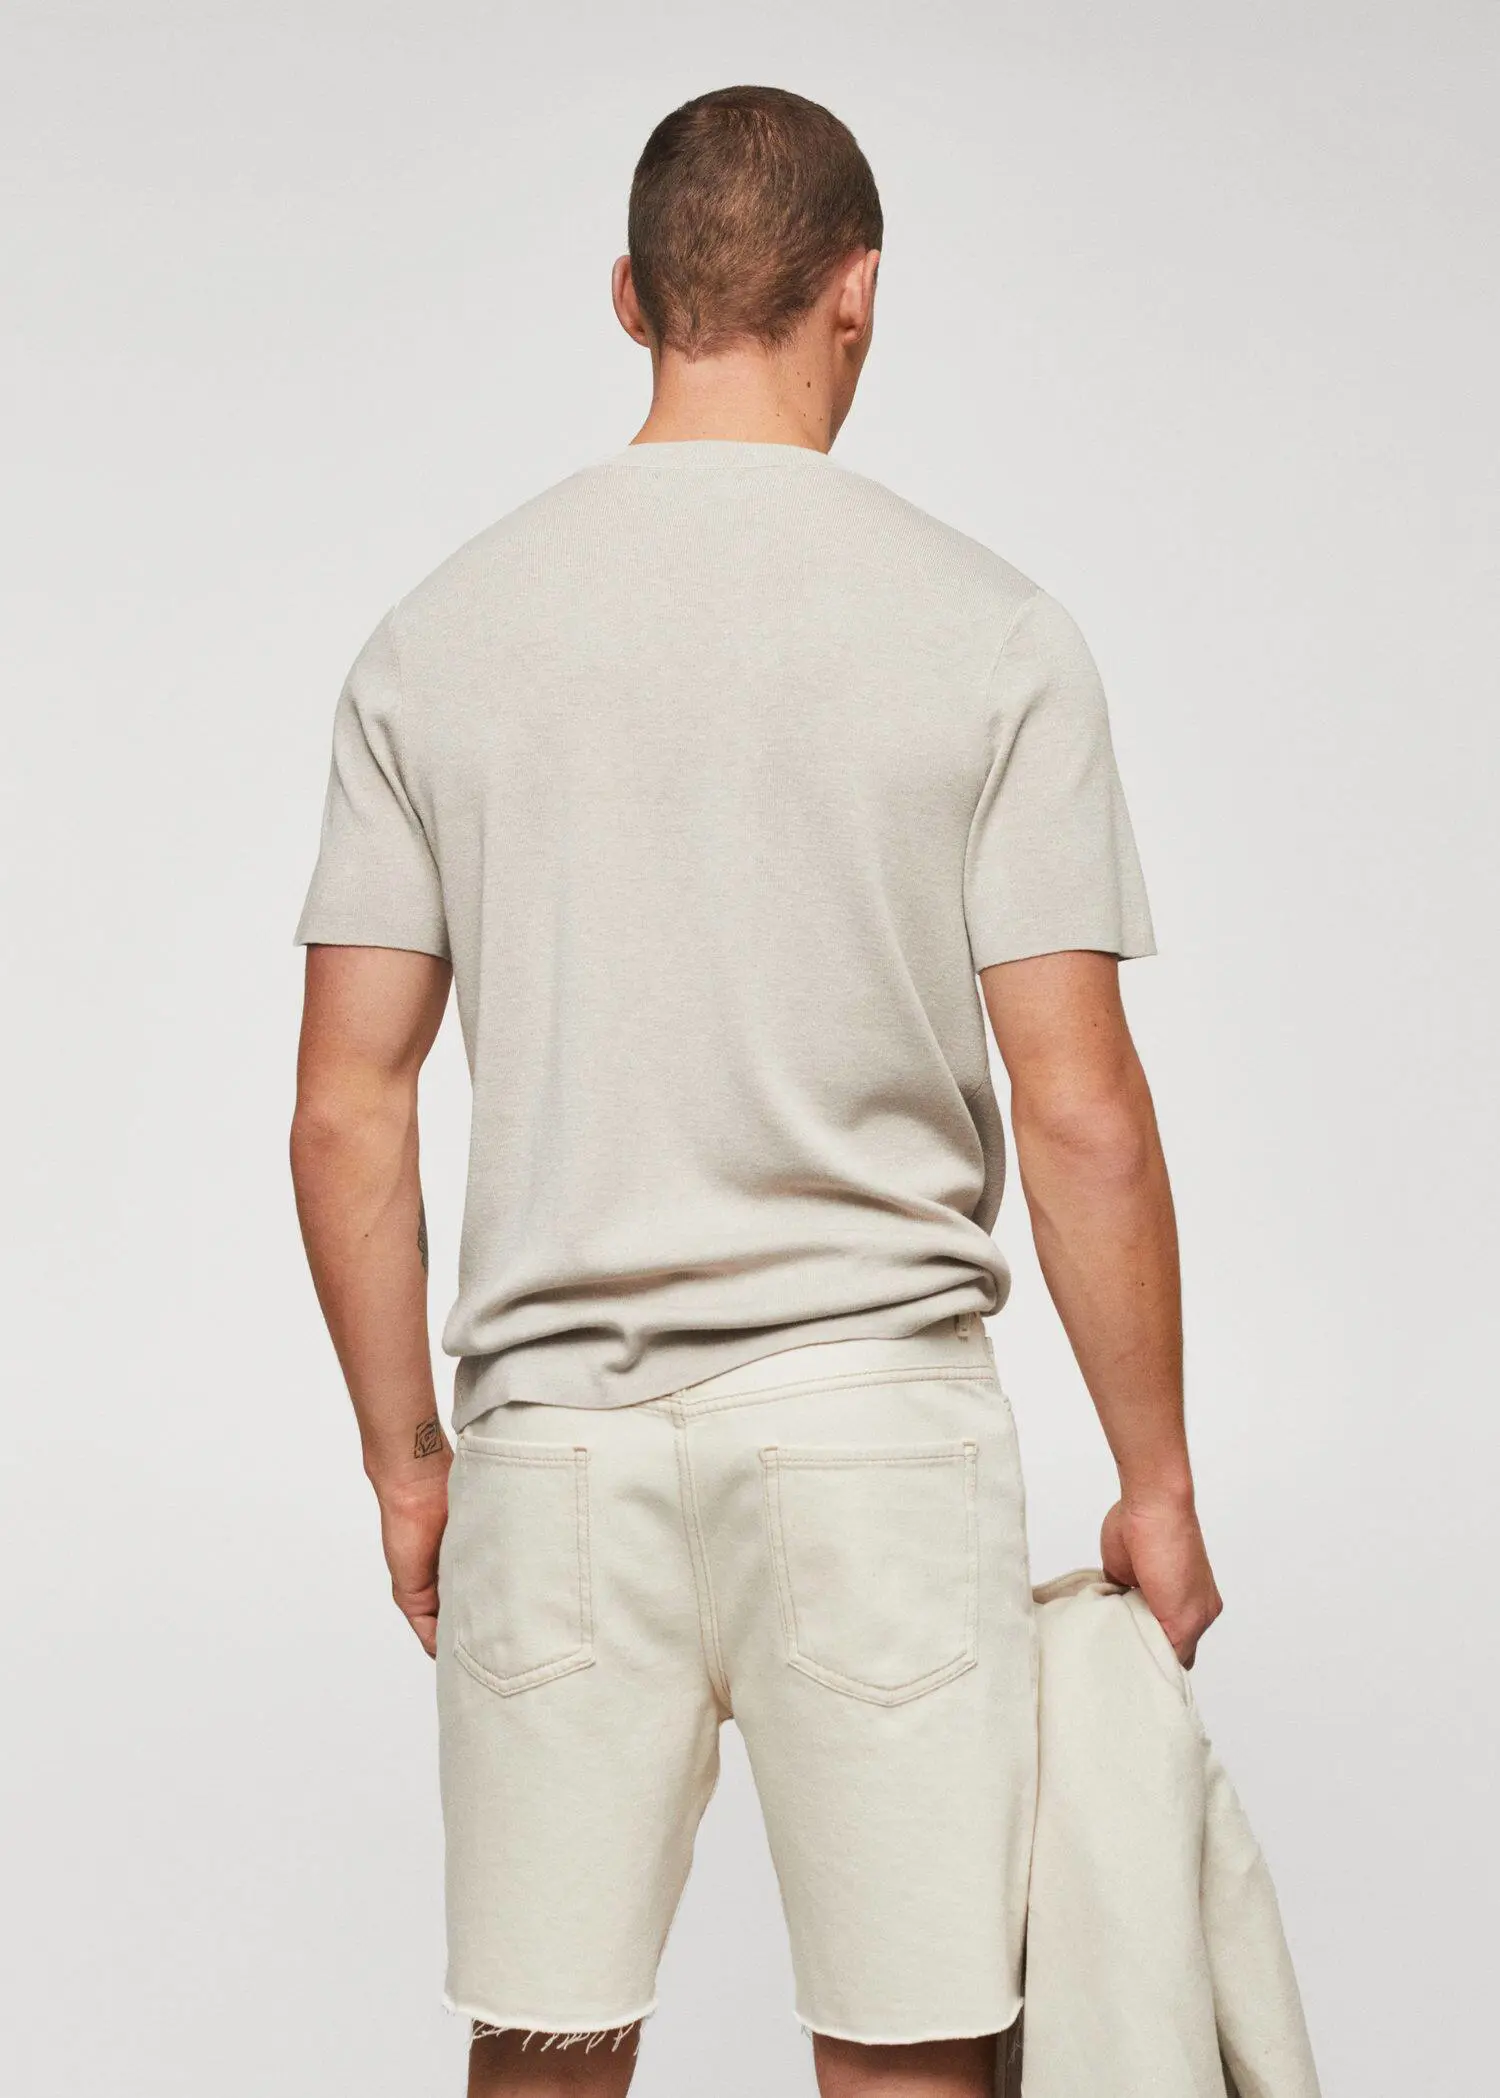 Mango Cotton fine-knit t-shirt. a man wearing white shorts and a white shirt. 